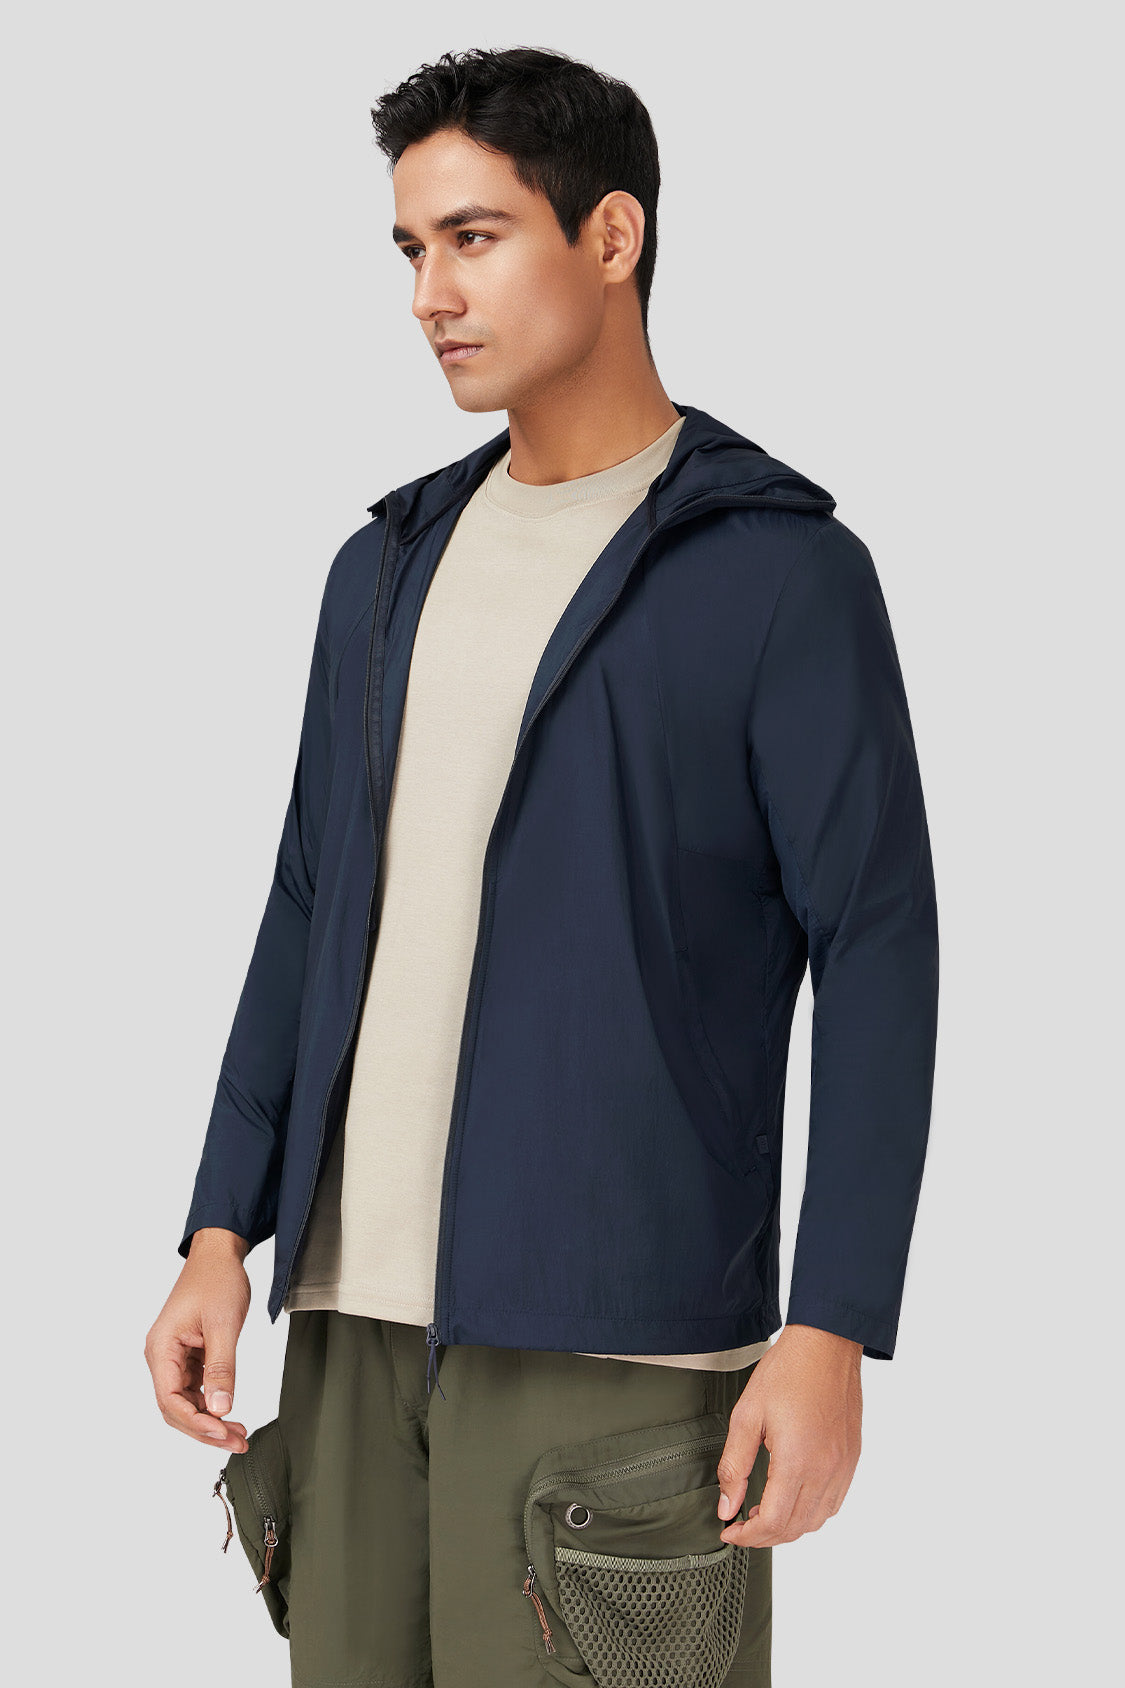 UV Protection Jacket, Beneunder Lightweight Zip Up Sun Protection Hoodie  for Men